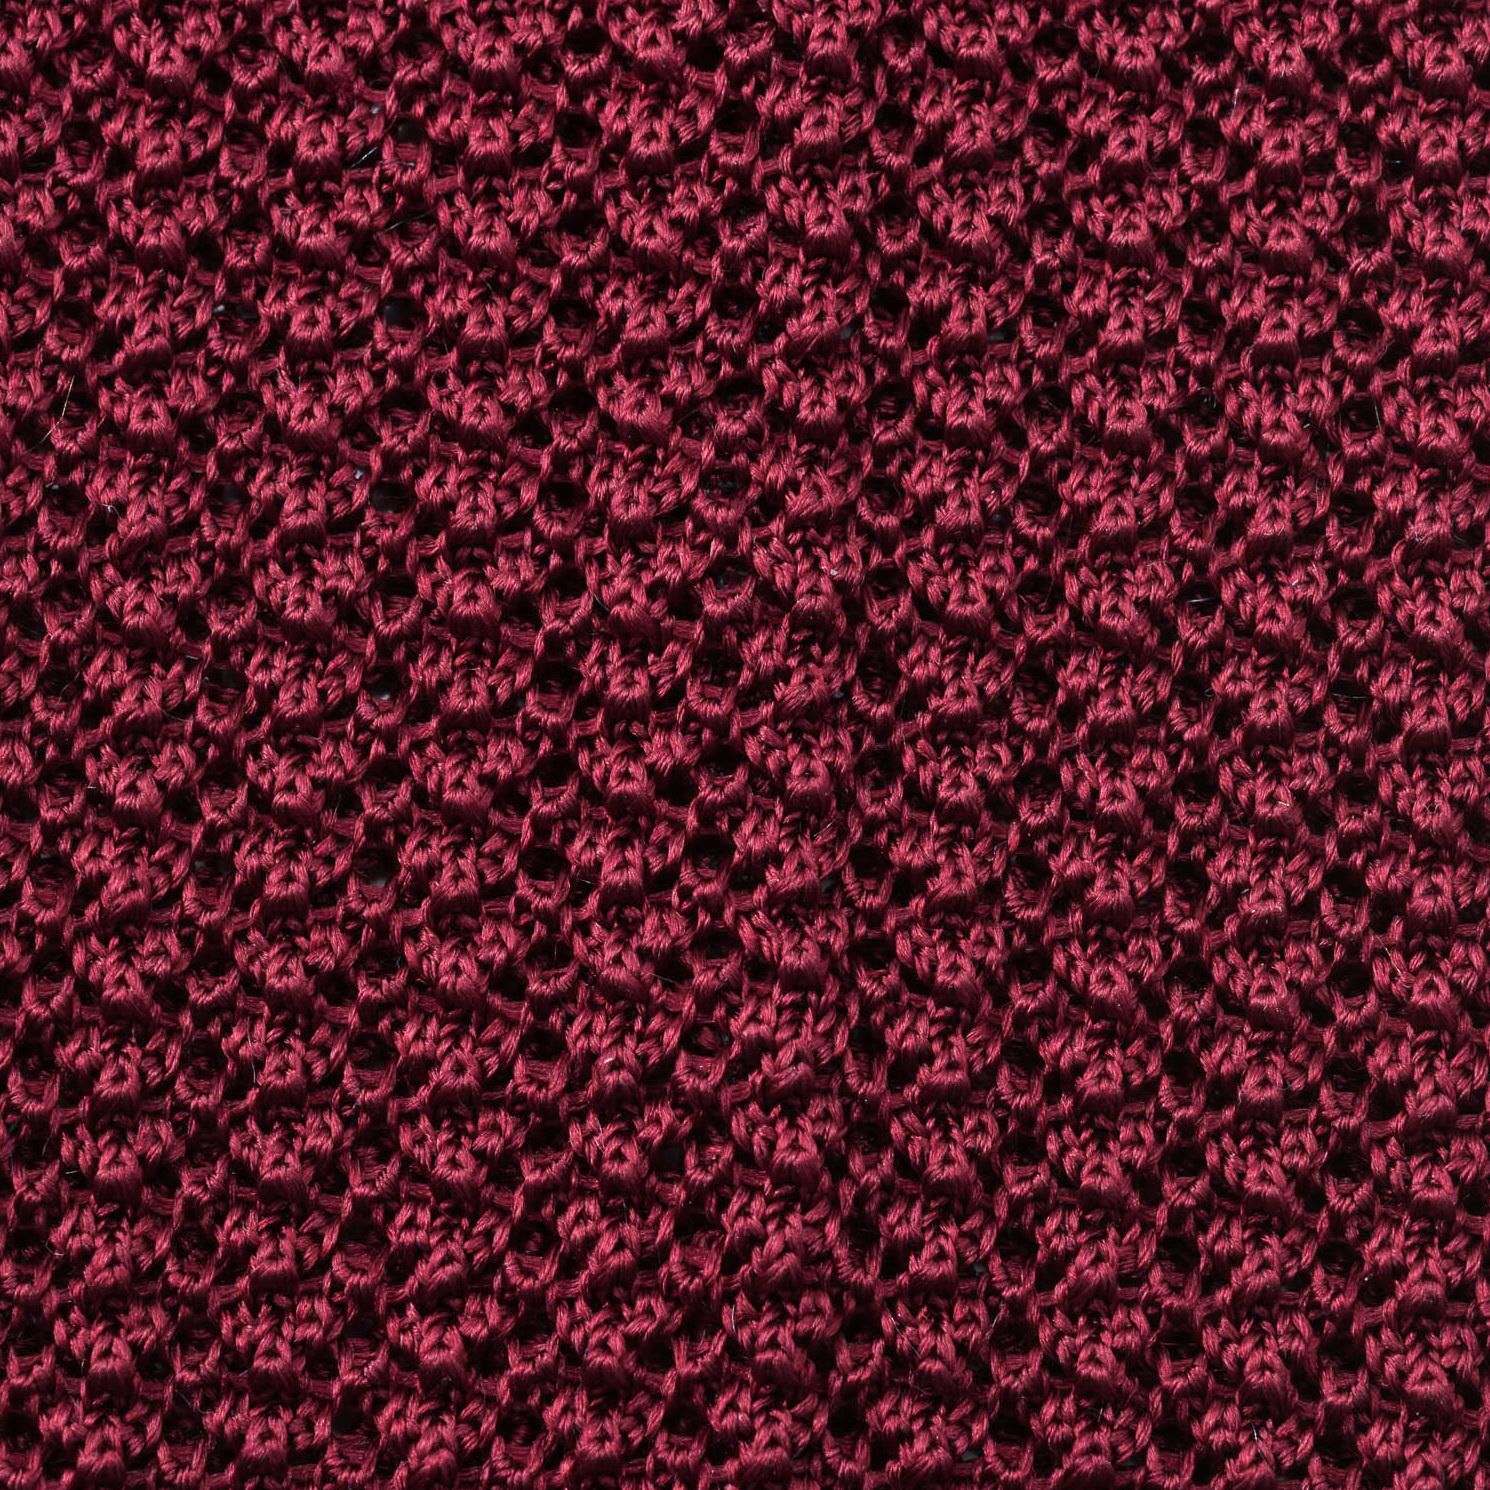 Knit Tie in Burgundy Solid Red Silk - Fort Belvedere